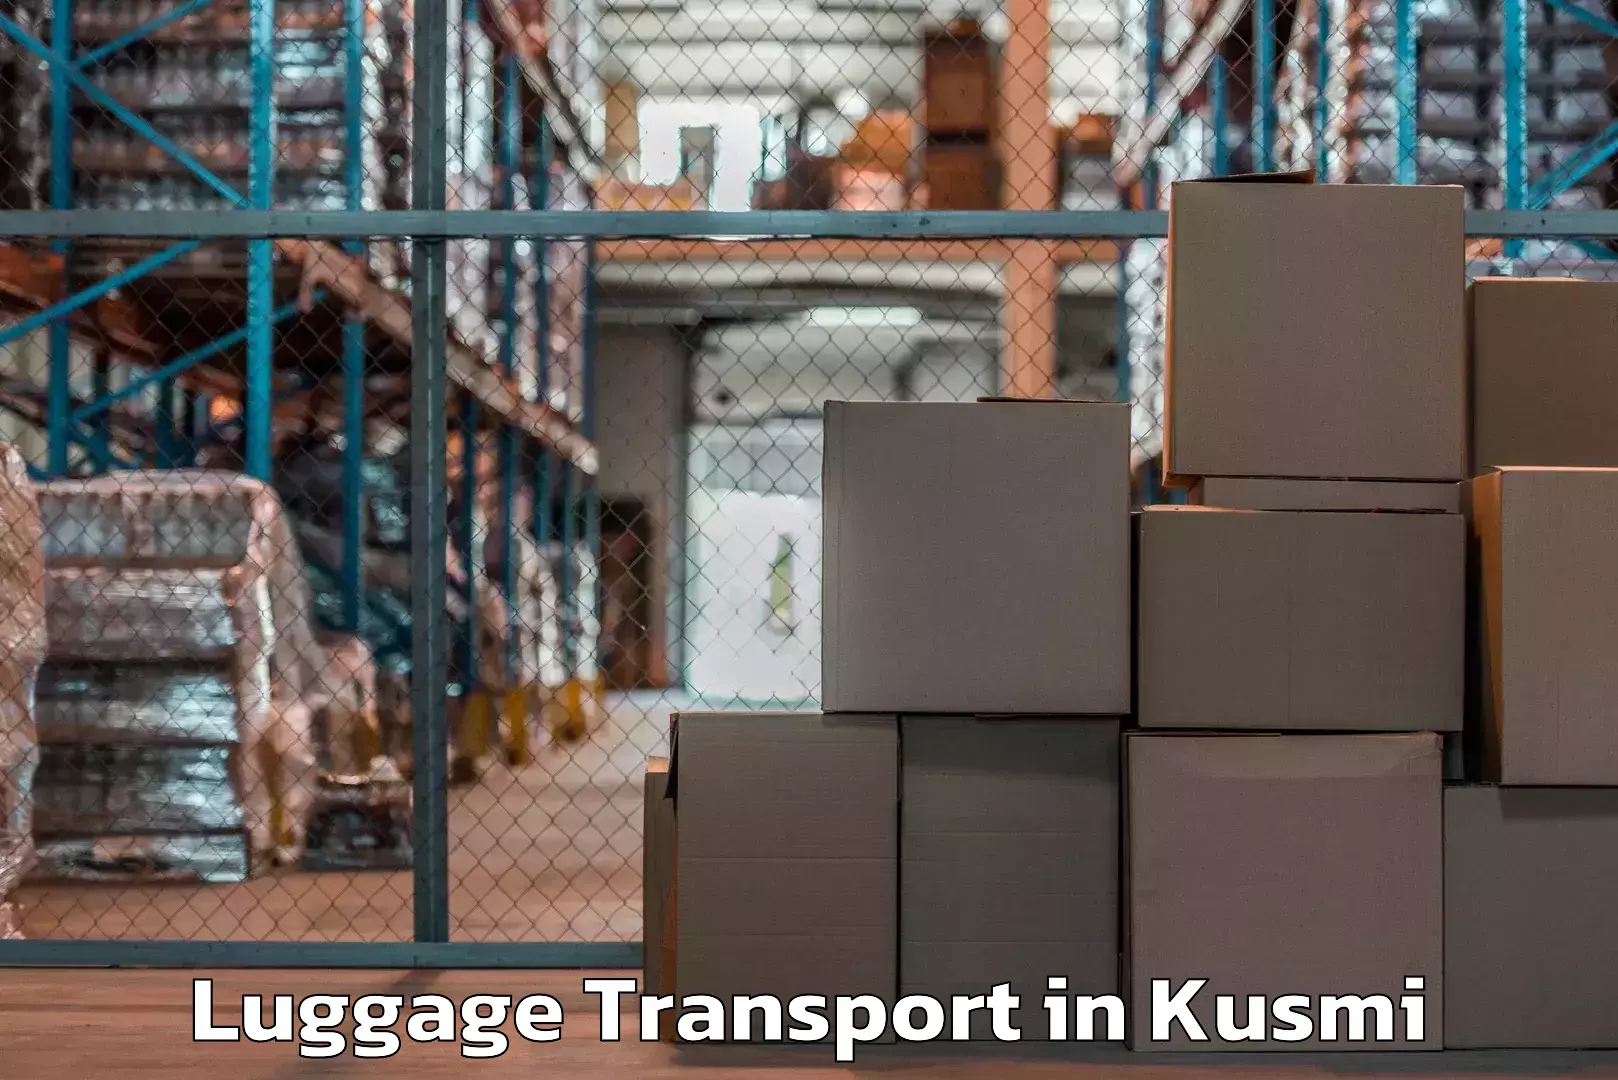 Automated luggage transport in Kusmi